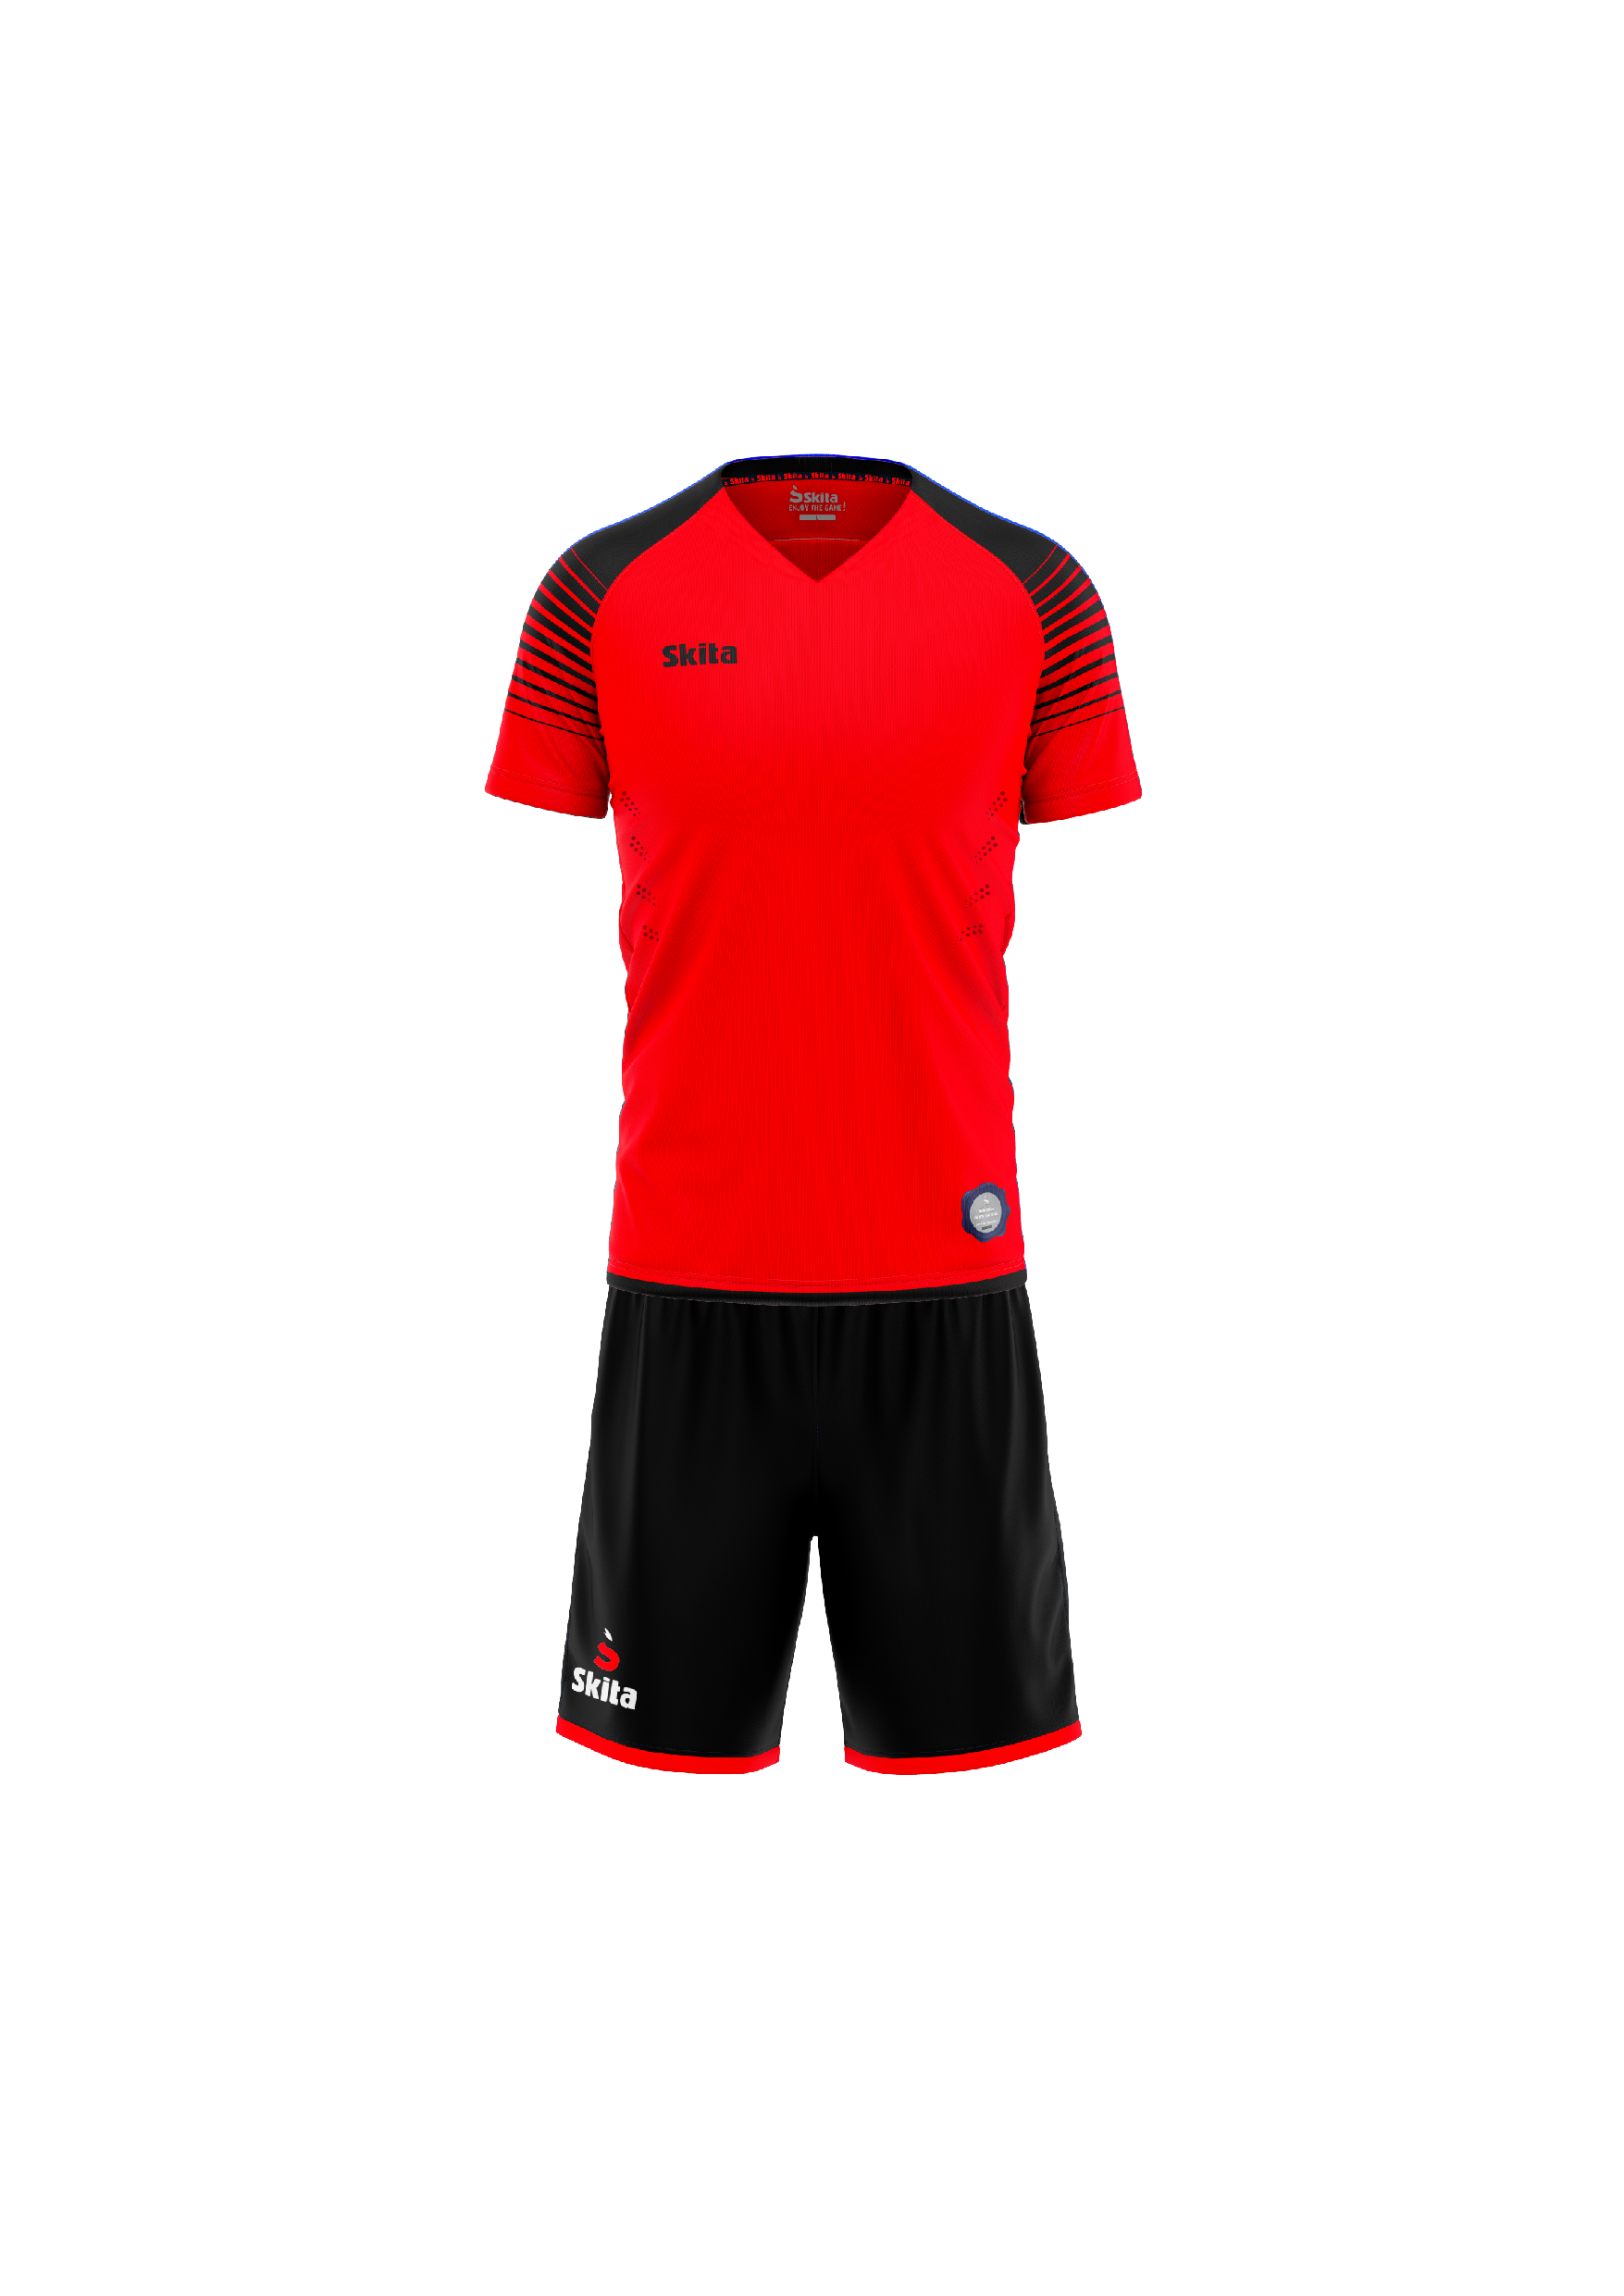 Football - Equipement, matériel, tenue et ensemble de foot